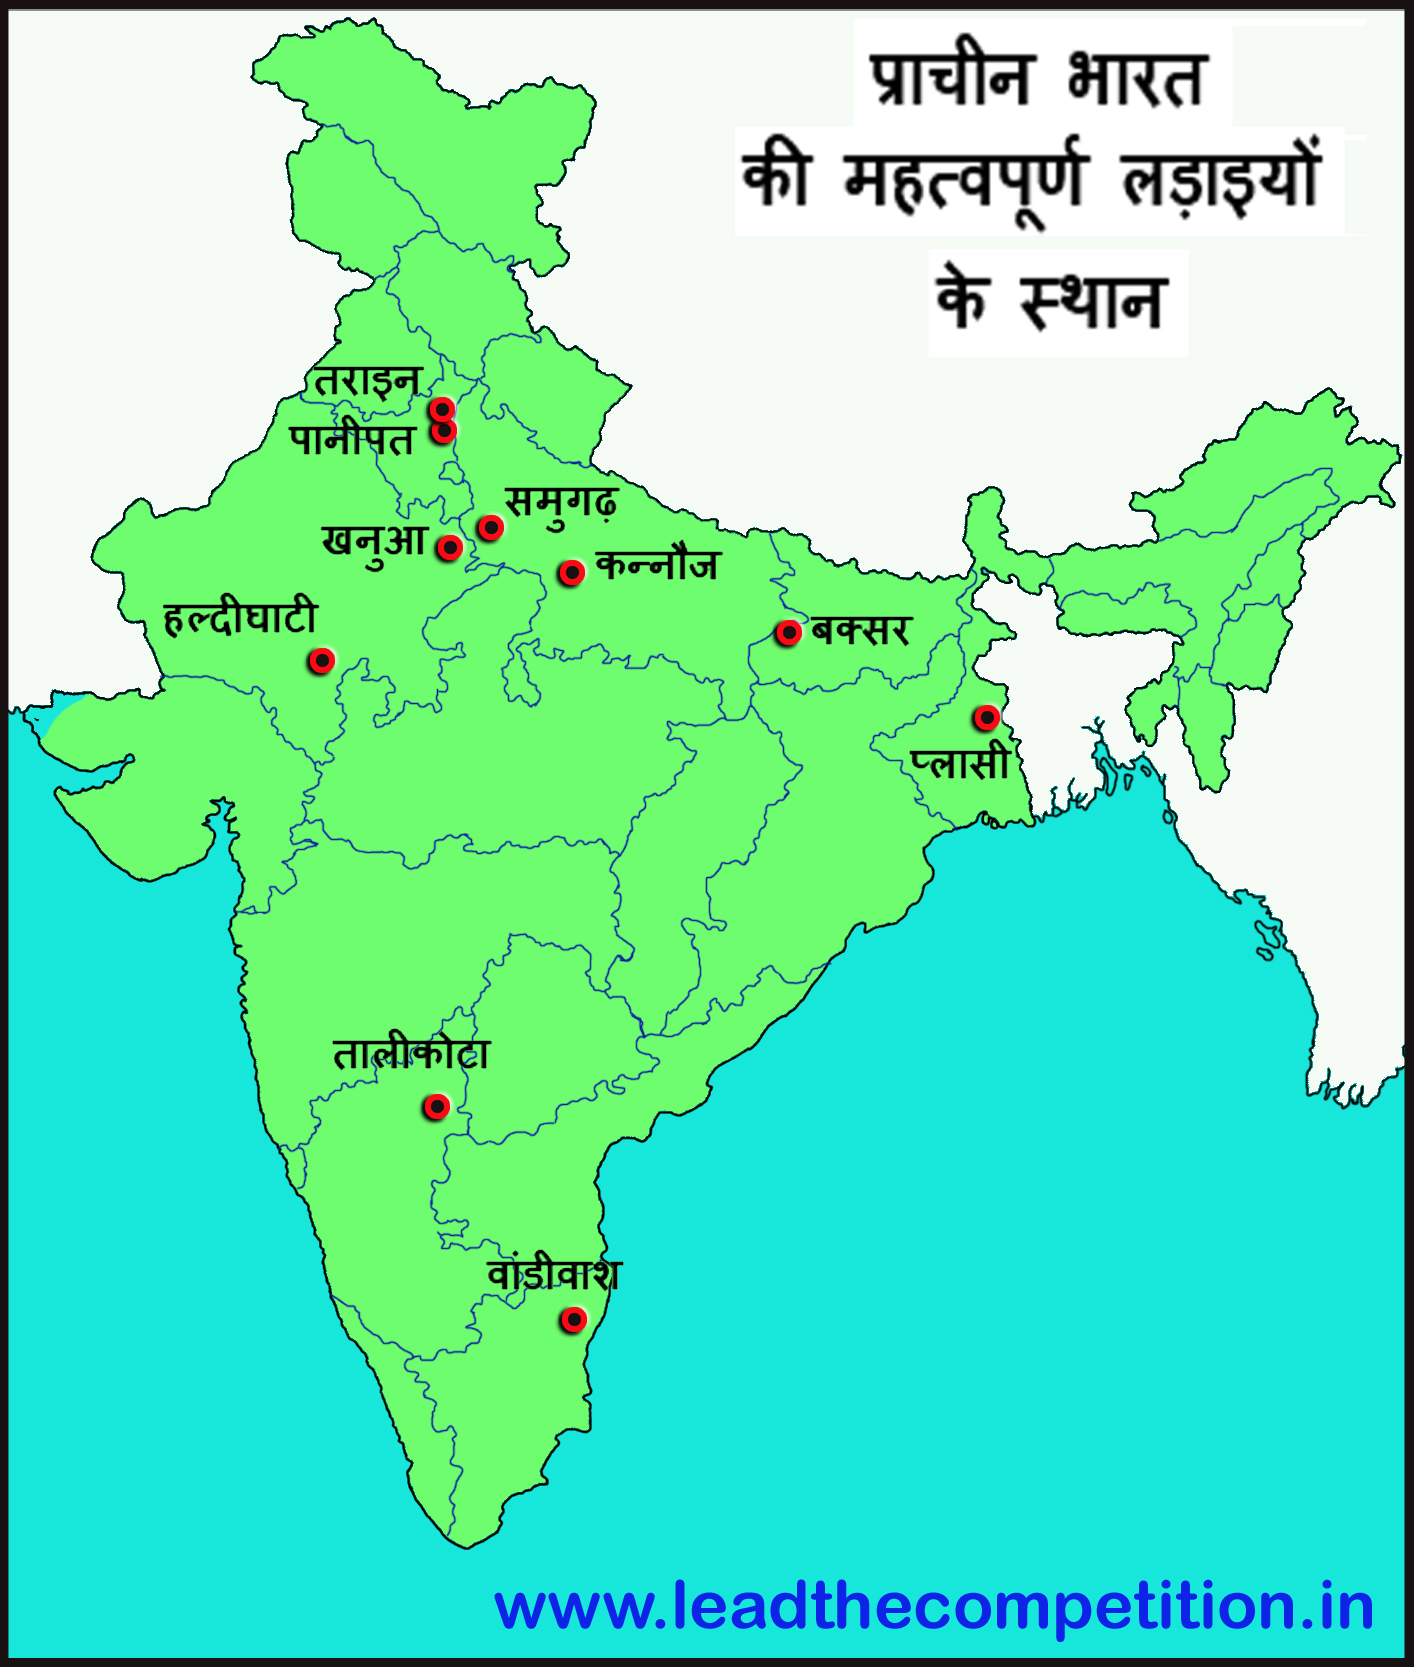 Places of Famous Indian Battles